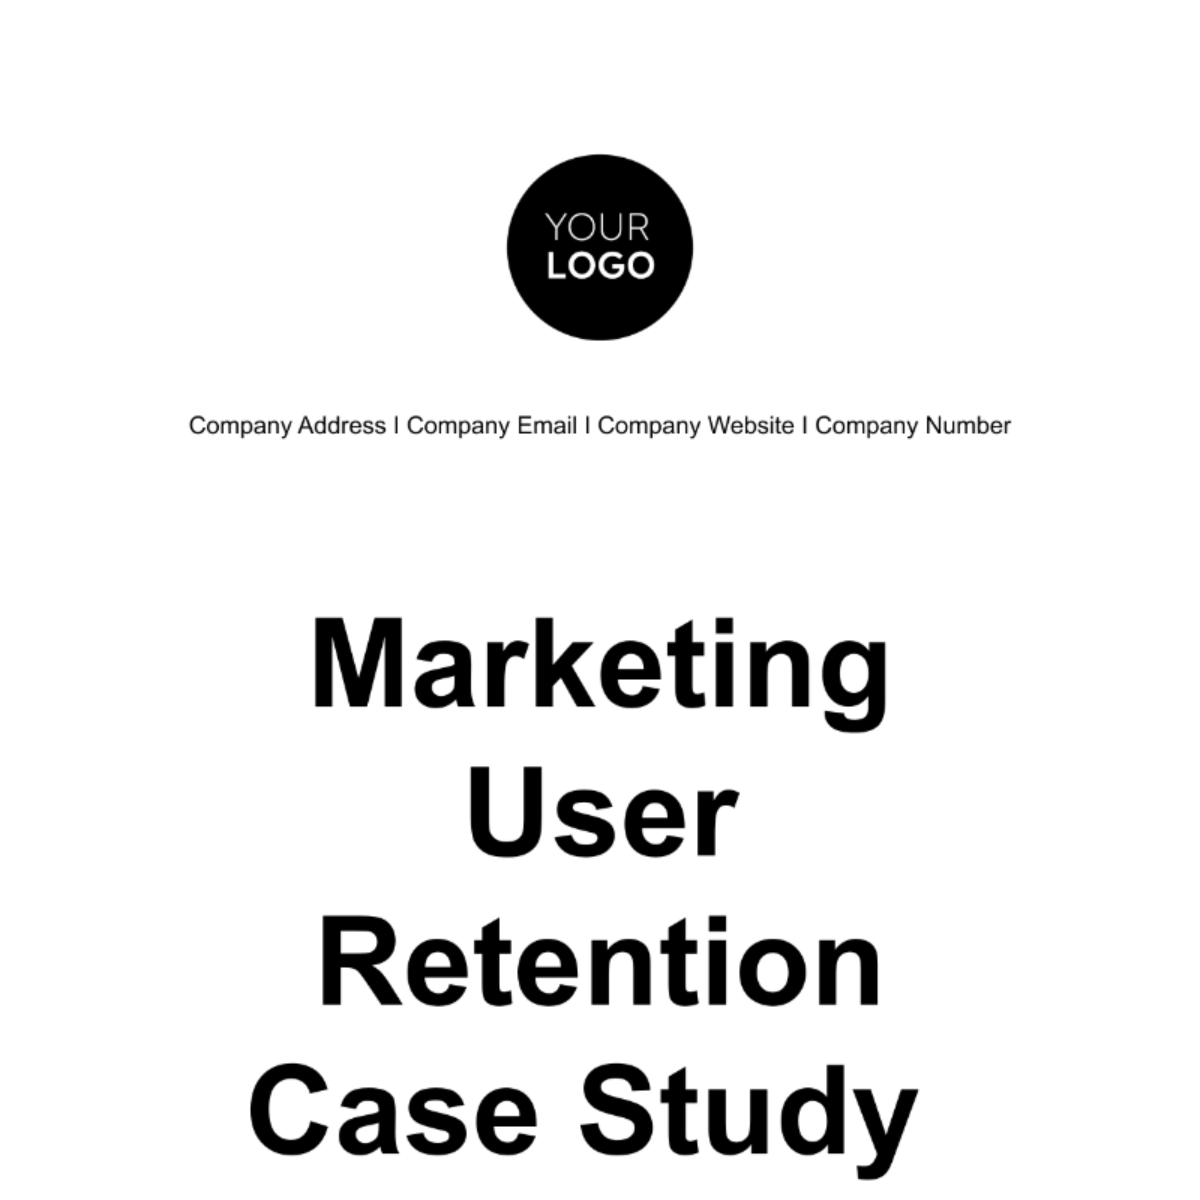 Marketing User Retention Case Study Template